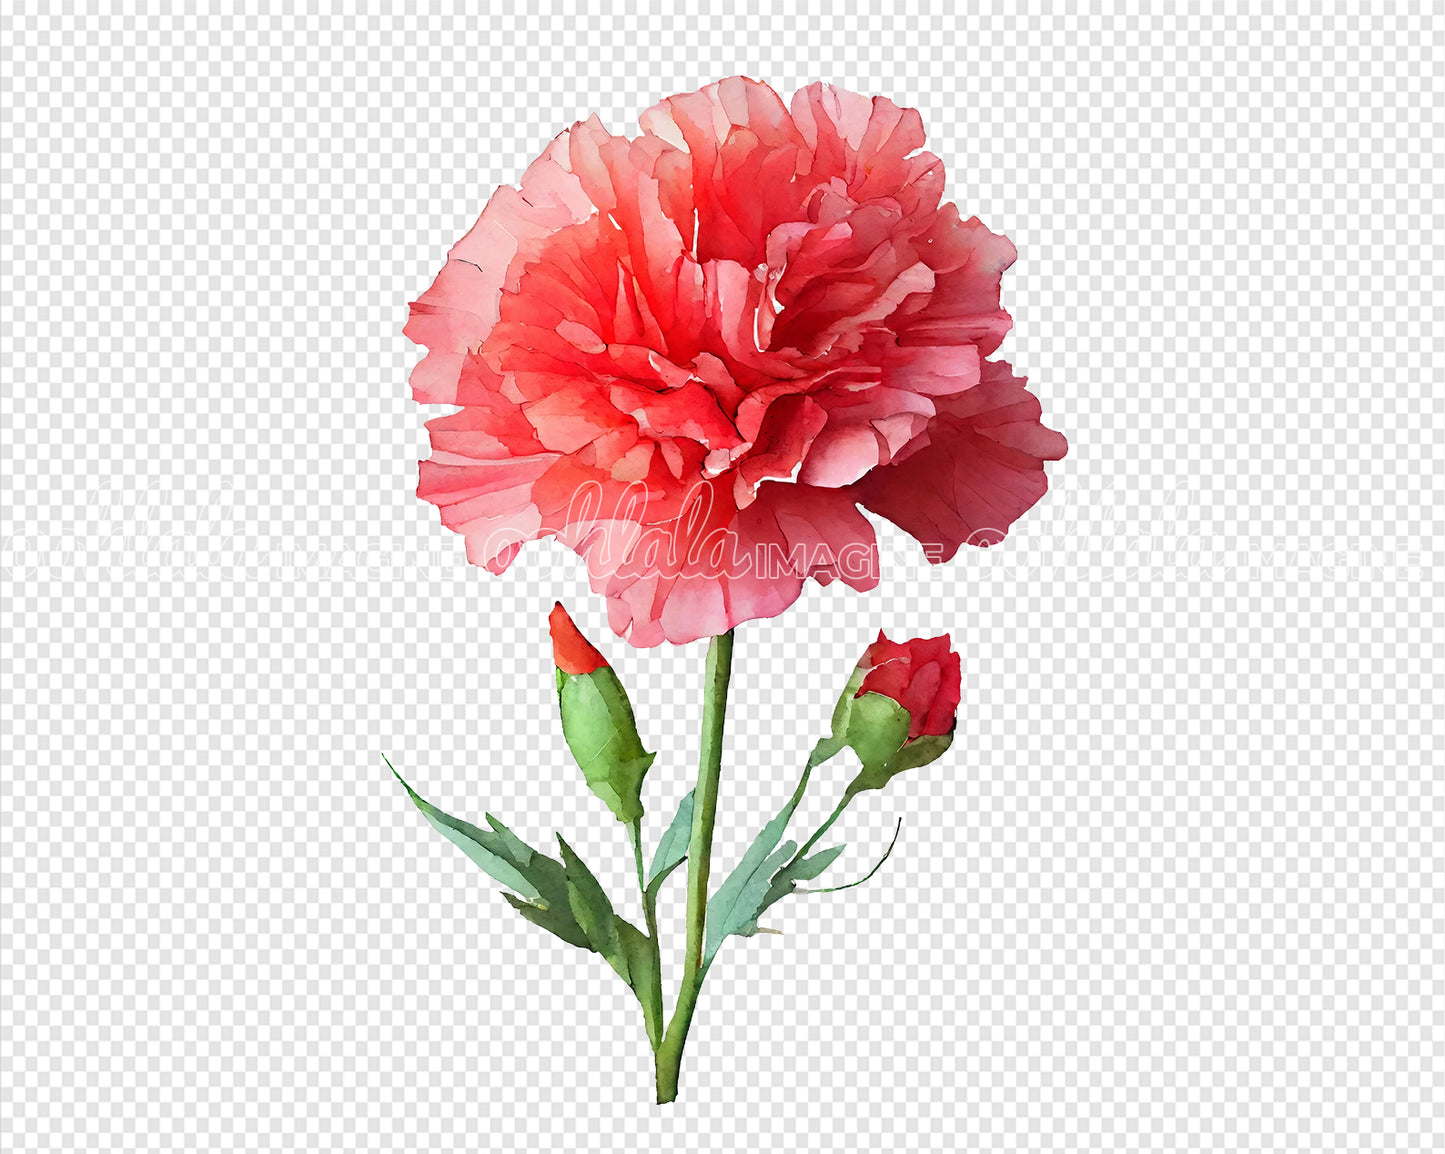 Carnation Flower Digital Watercolor PNG x 10